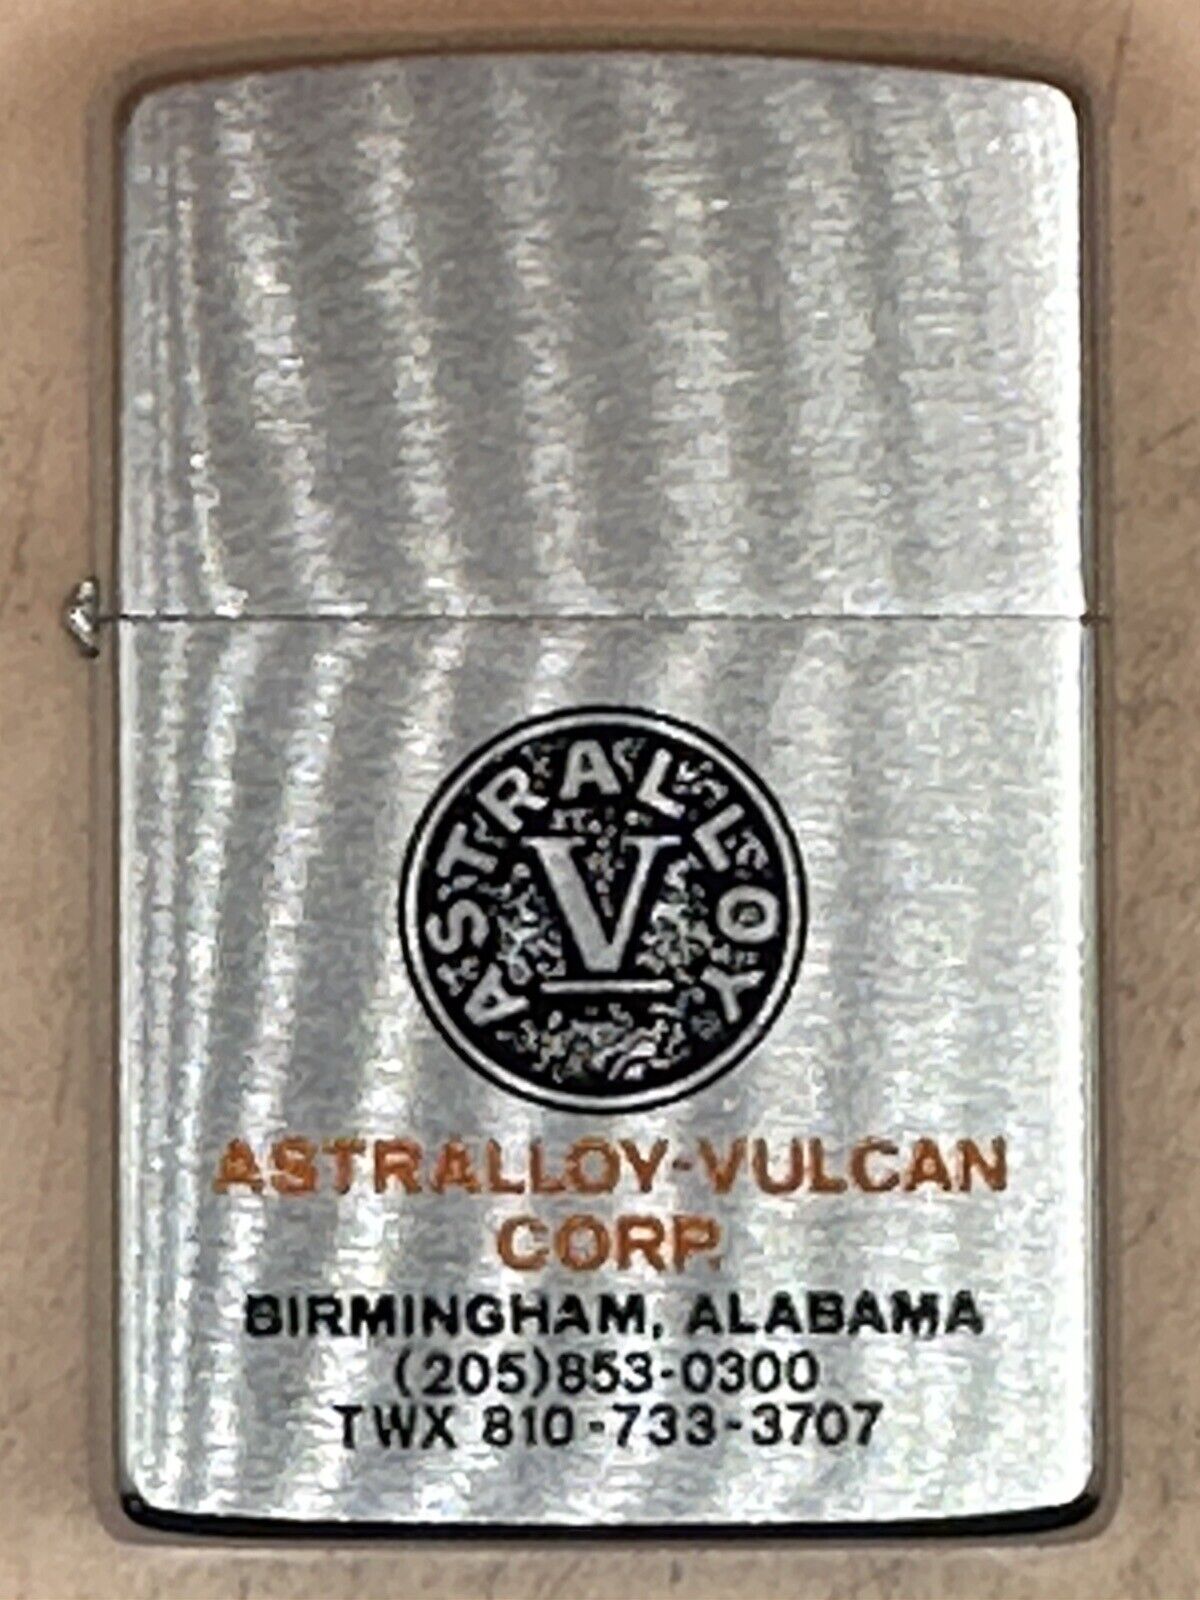 Vintage 1975 Astralloy Vulcan Corp Advertising Chrome Zippo Lighter